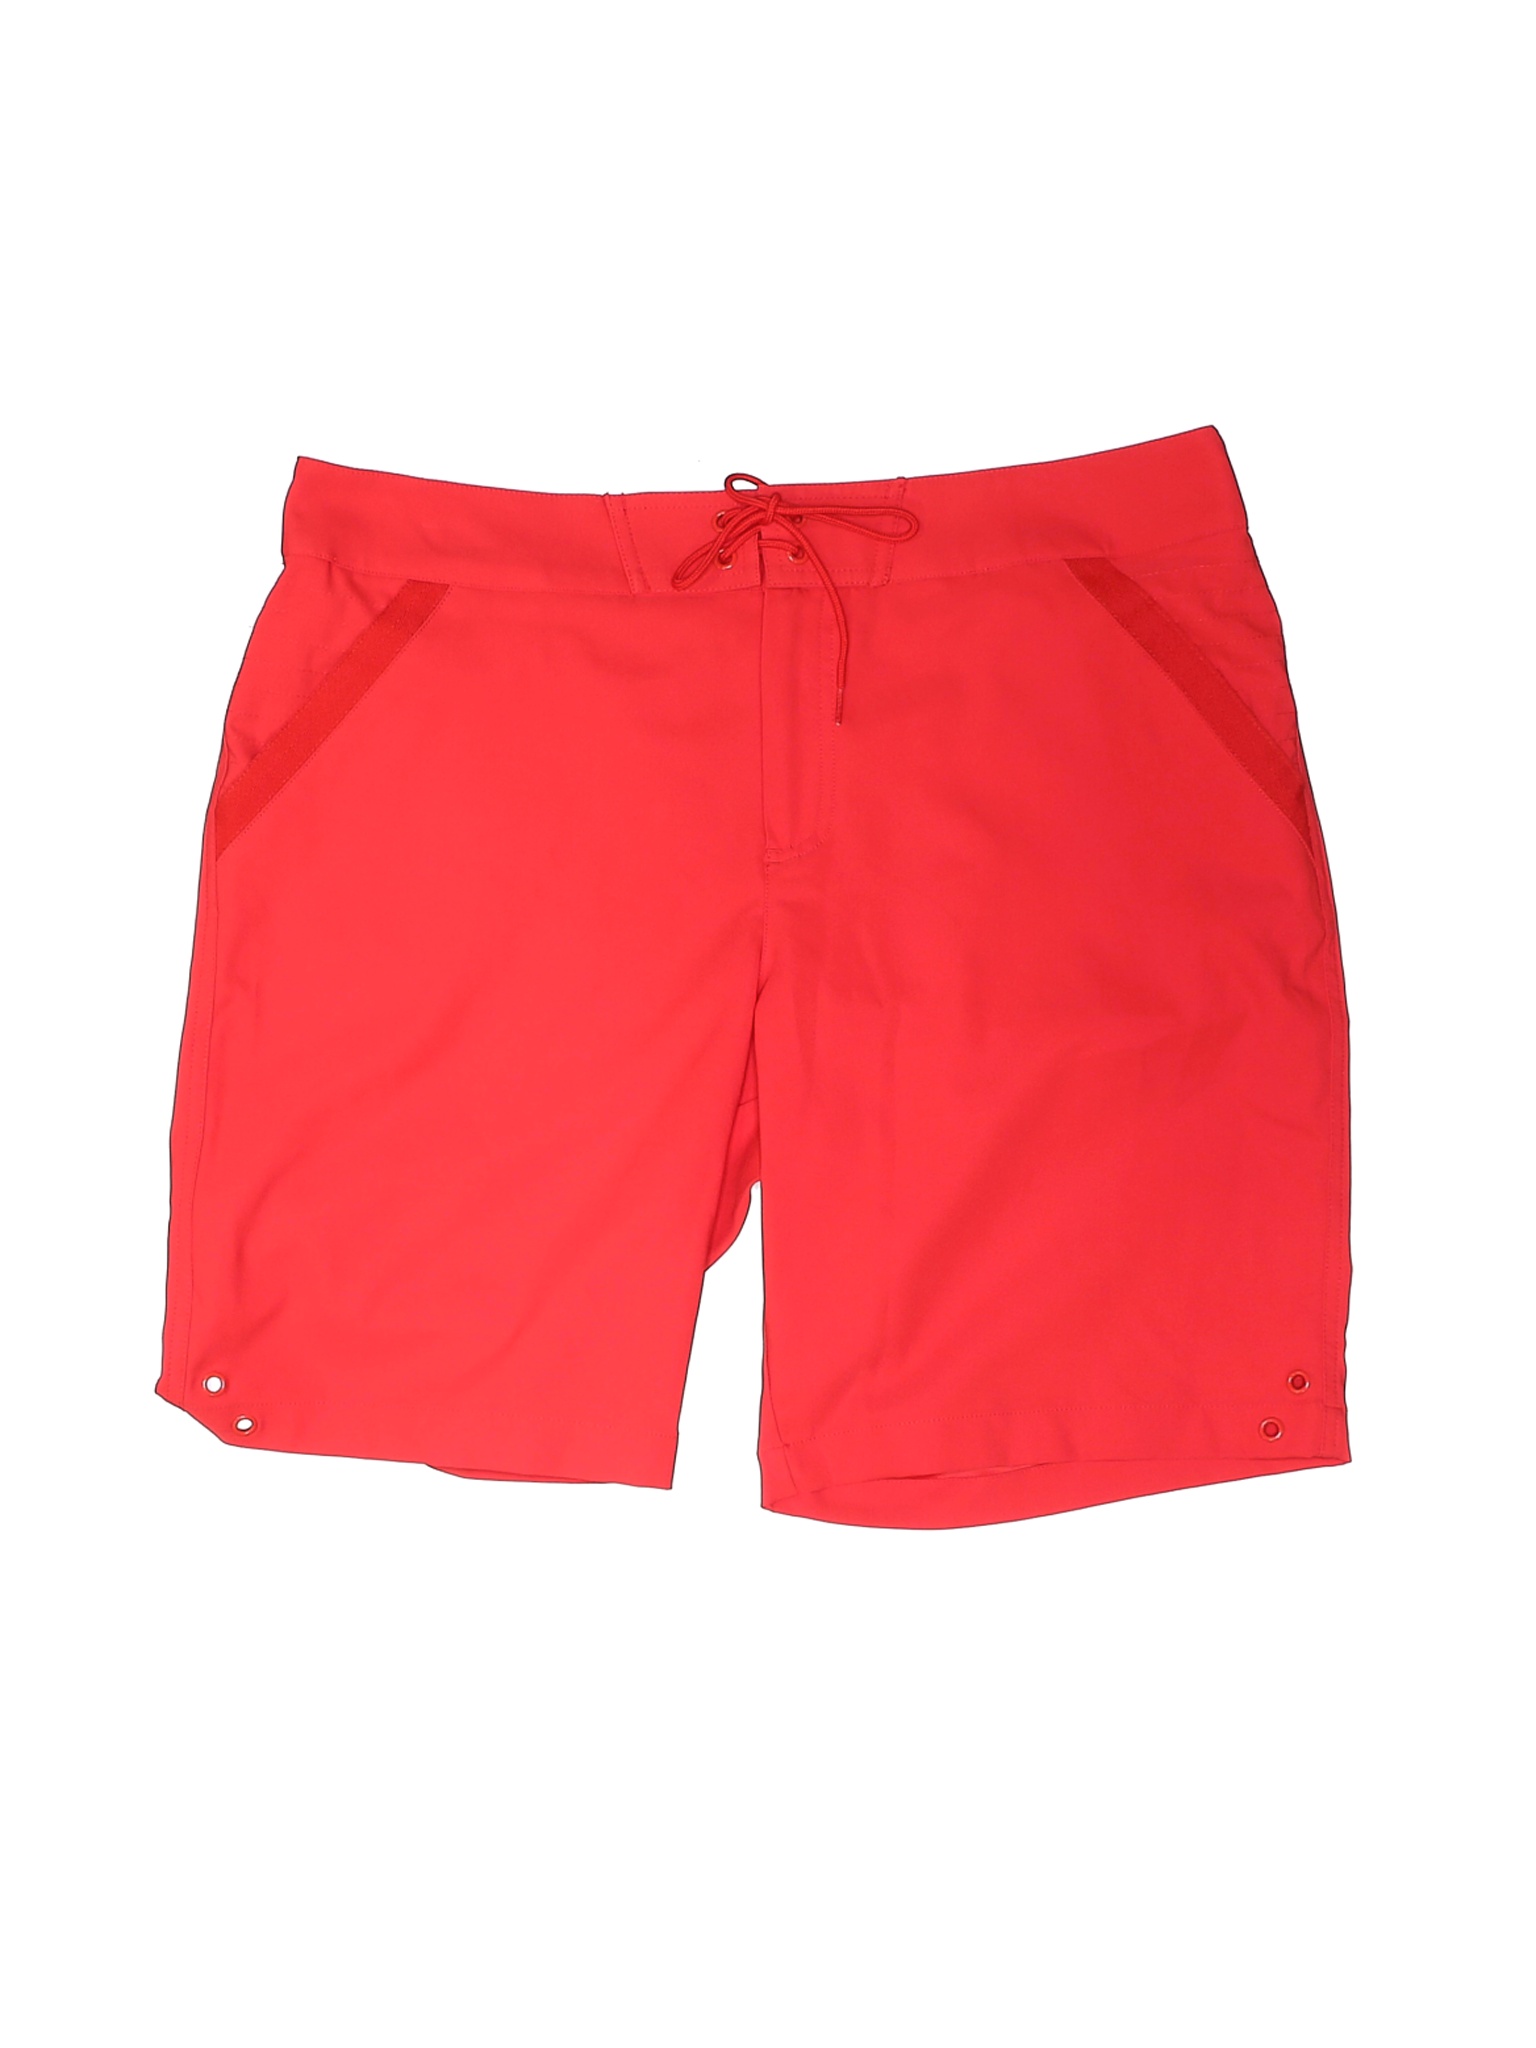 Jag Women Red Board Shorts L | eBay